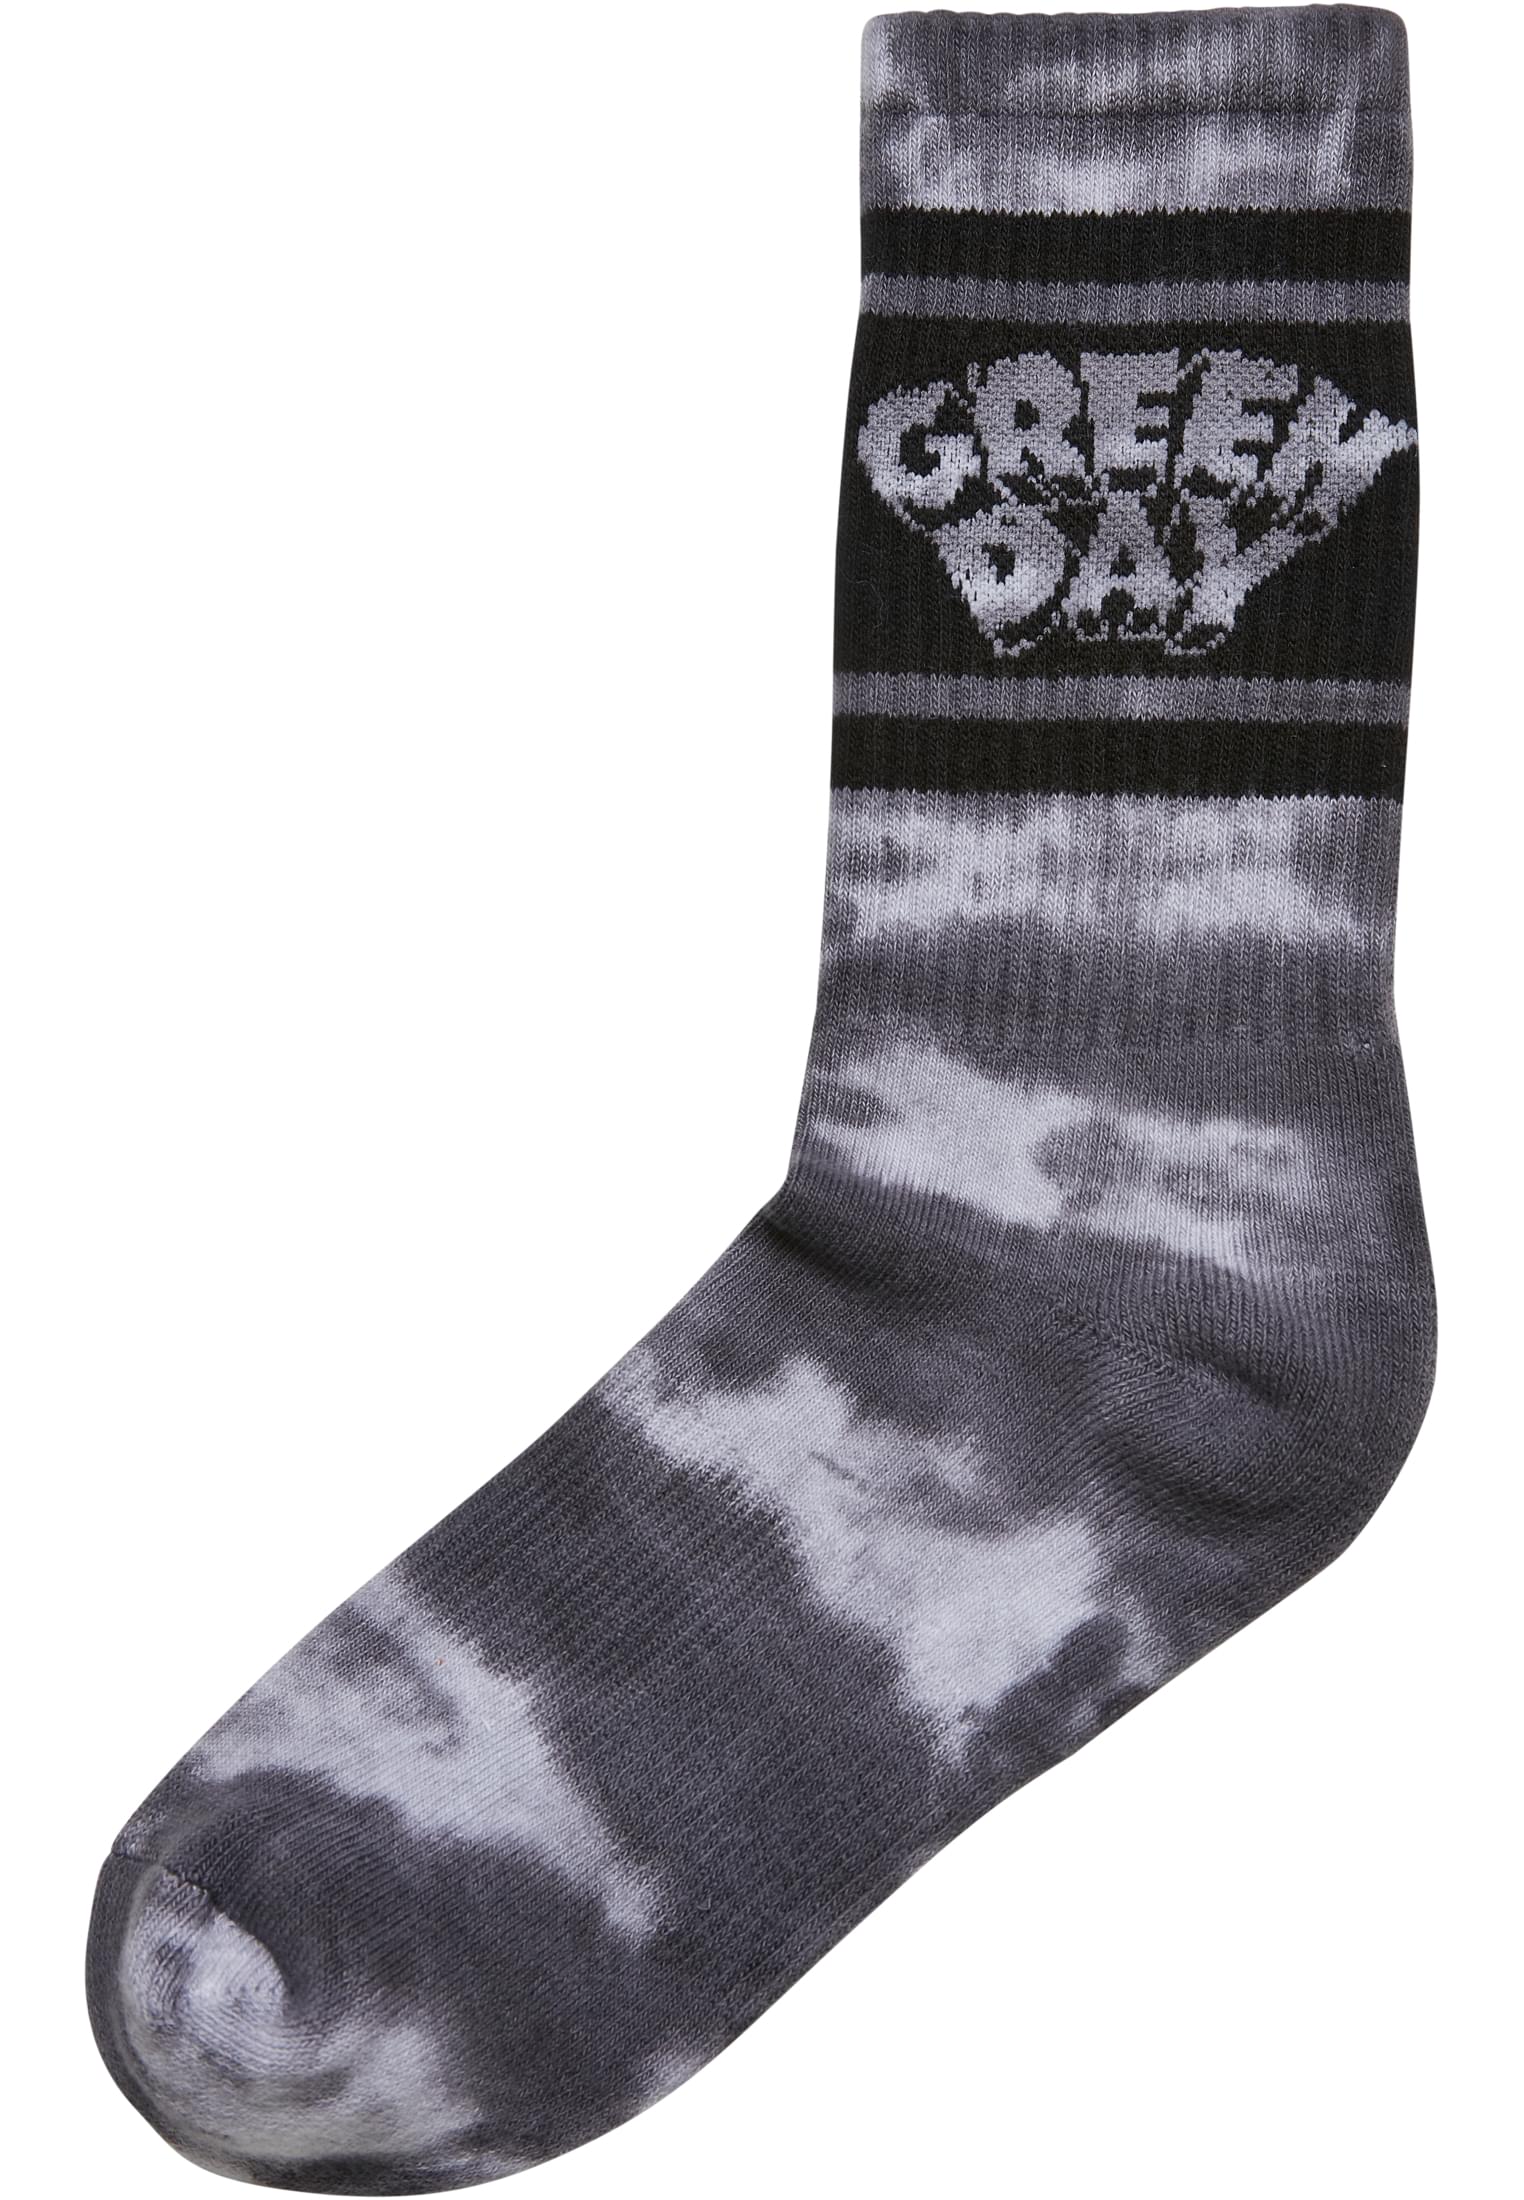 Accessoires Green Day Tie Die Socks 2-Pack in Farbe black/white